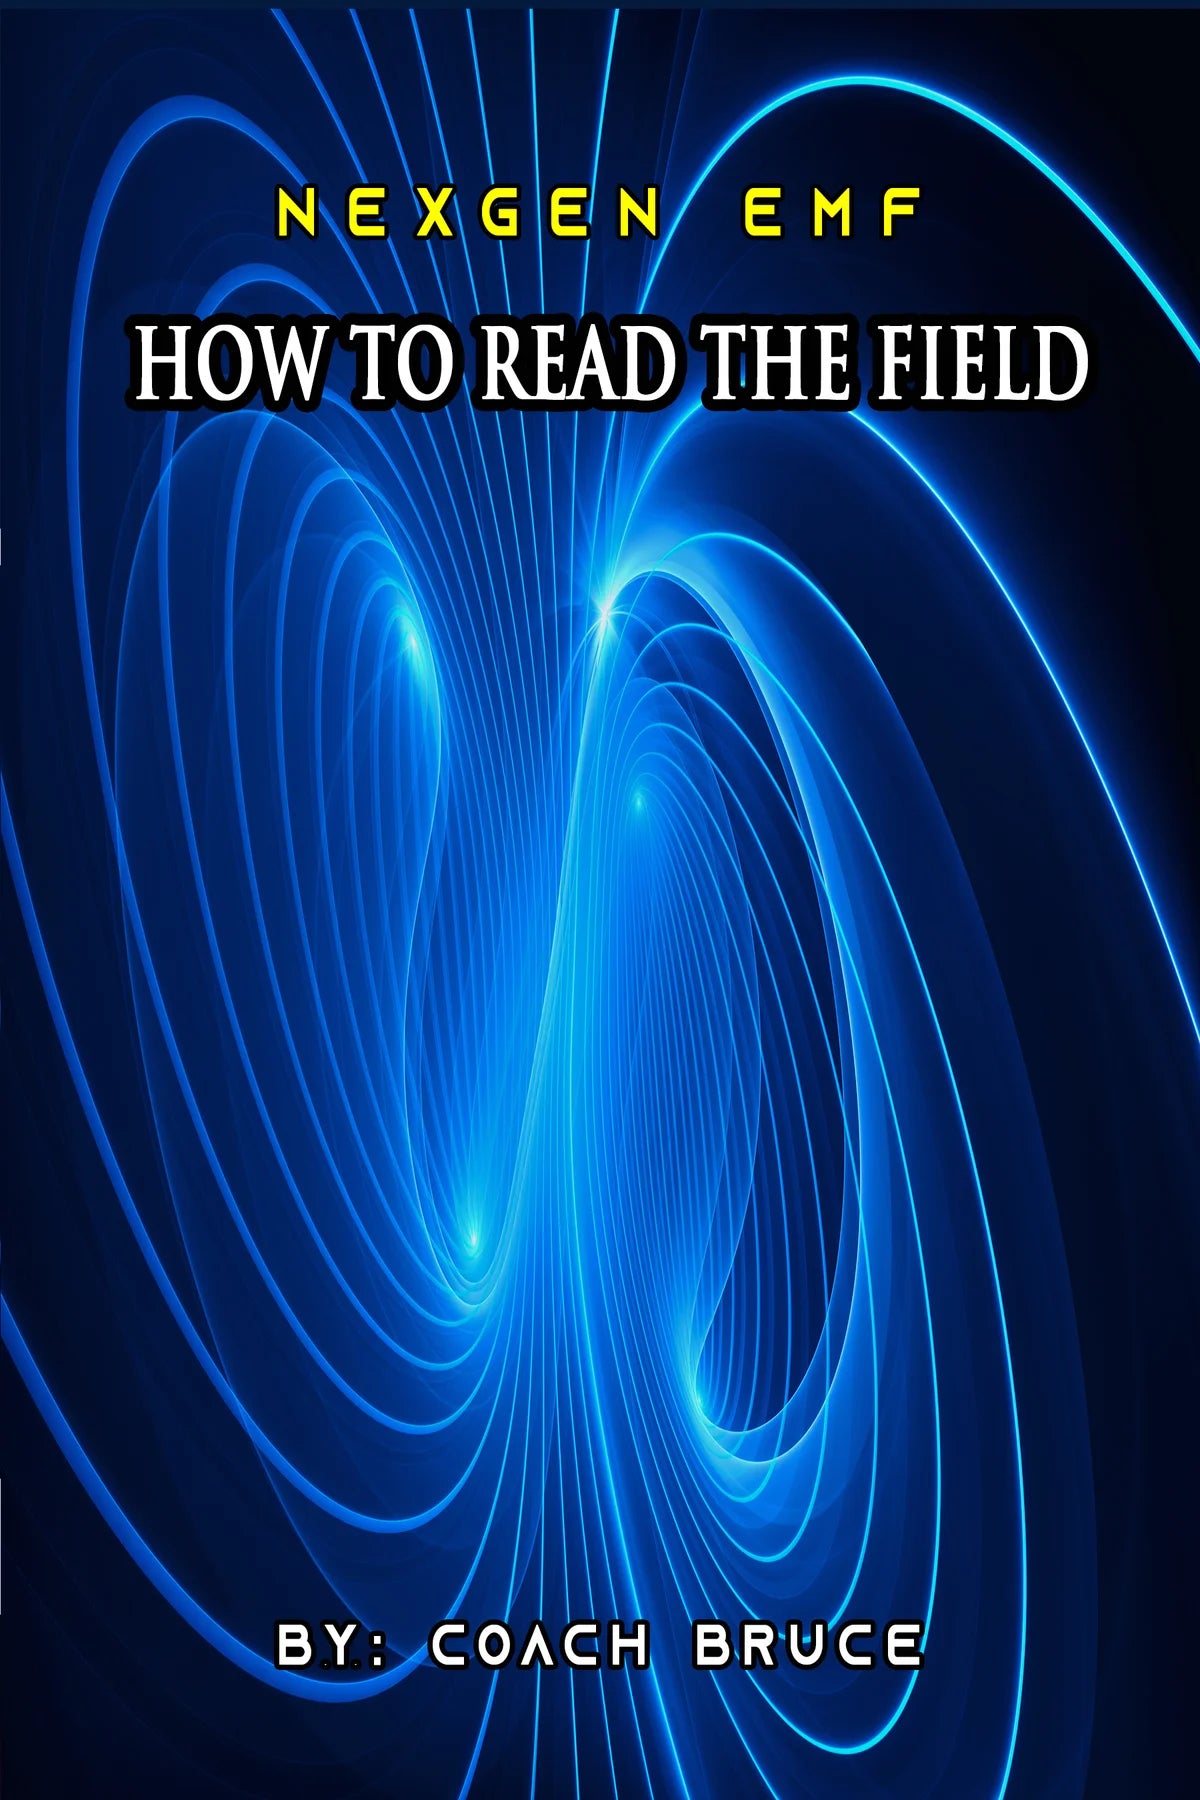 NEXGEN EMF BOOK - HOW TO READ THE FIELD (PAPERBACK)